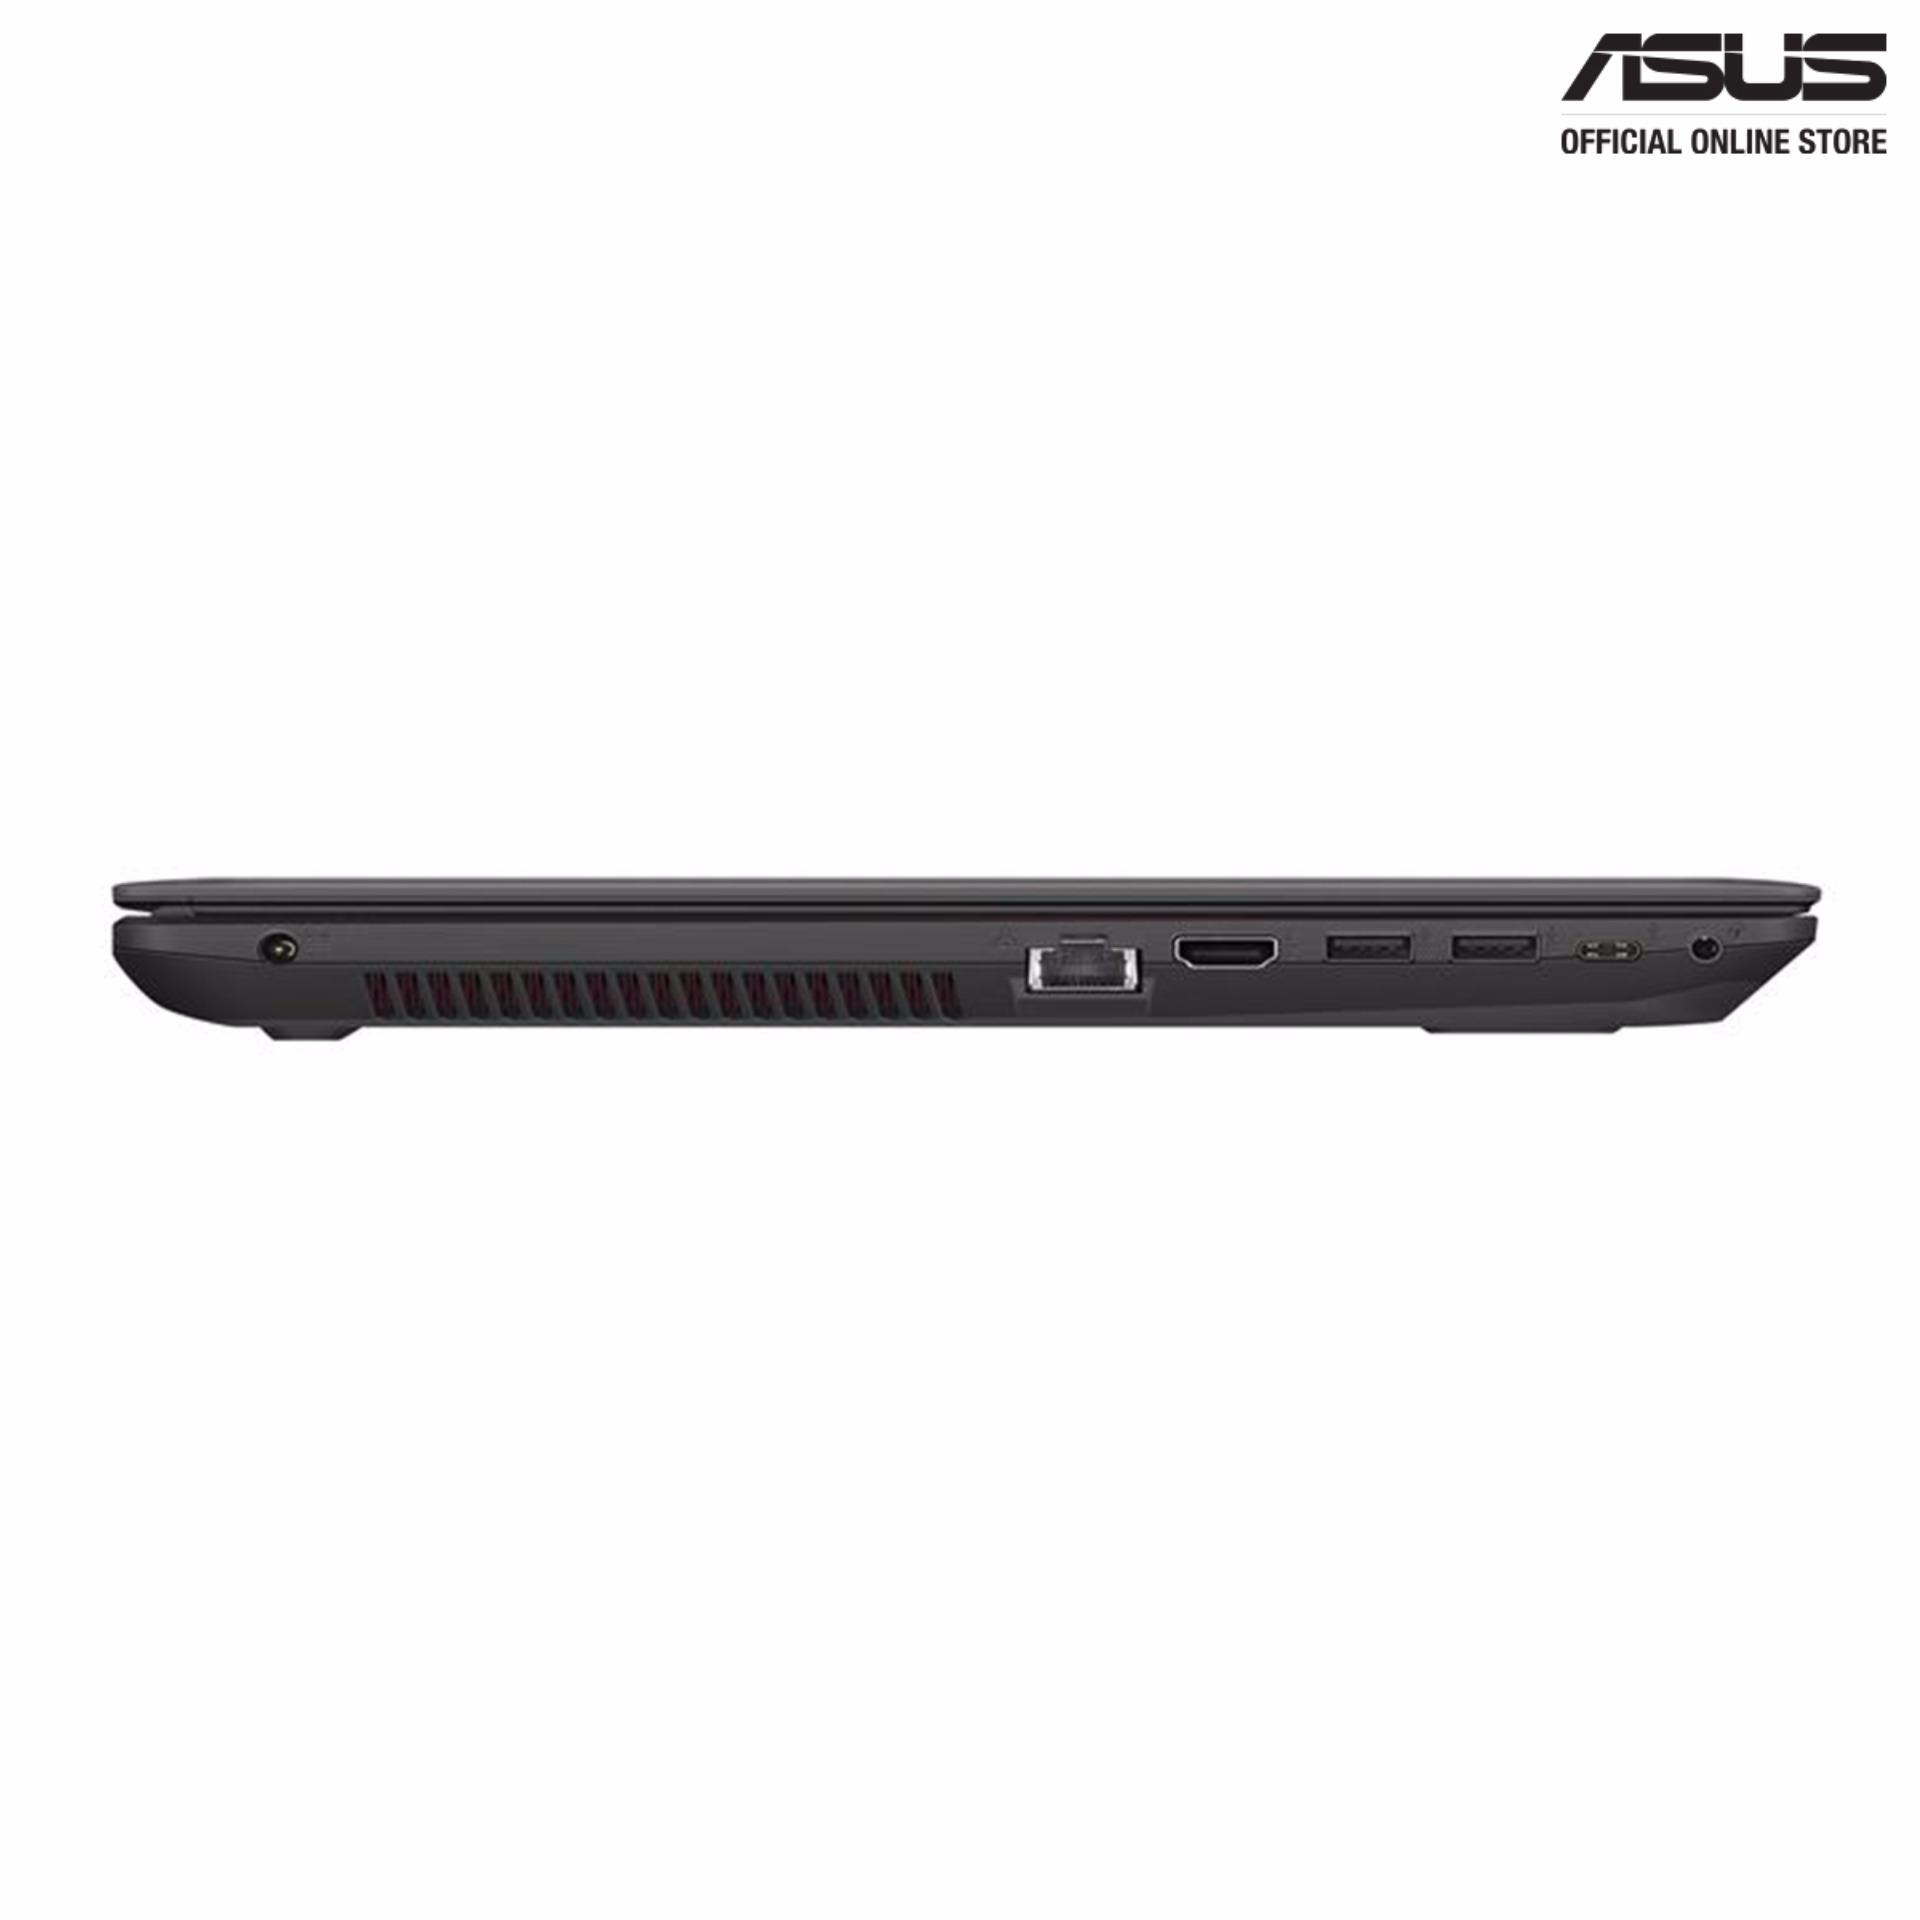 ASUS VivoBook FX553VD-DM462T (Metal) [FREE Microsoft Xbox One S (1TB)]